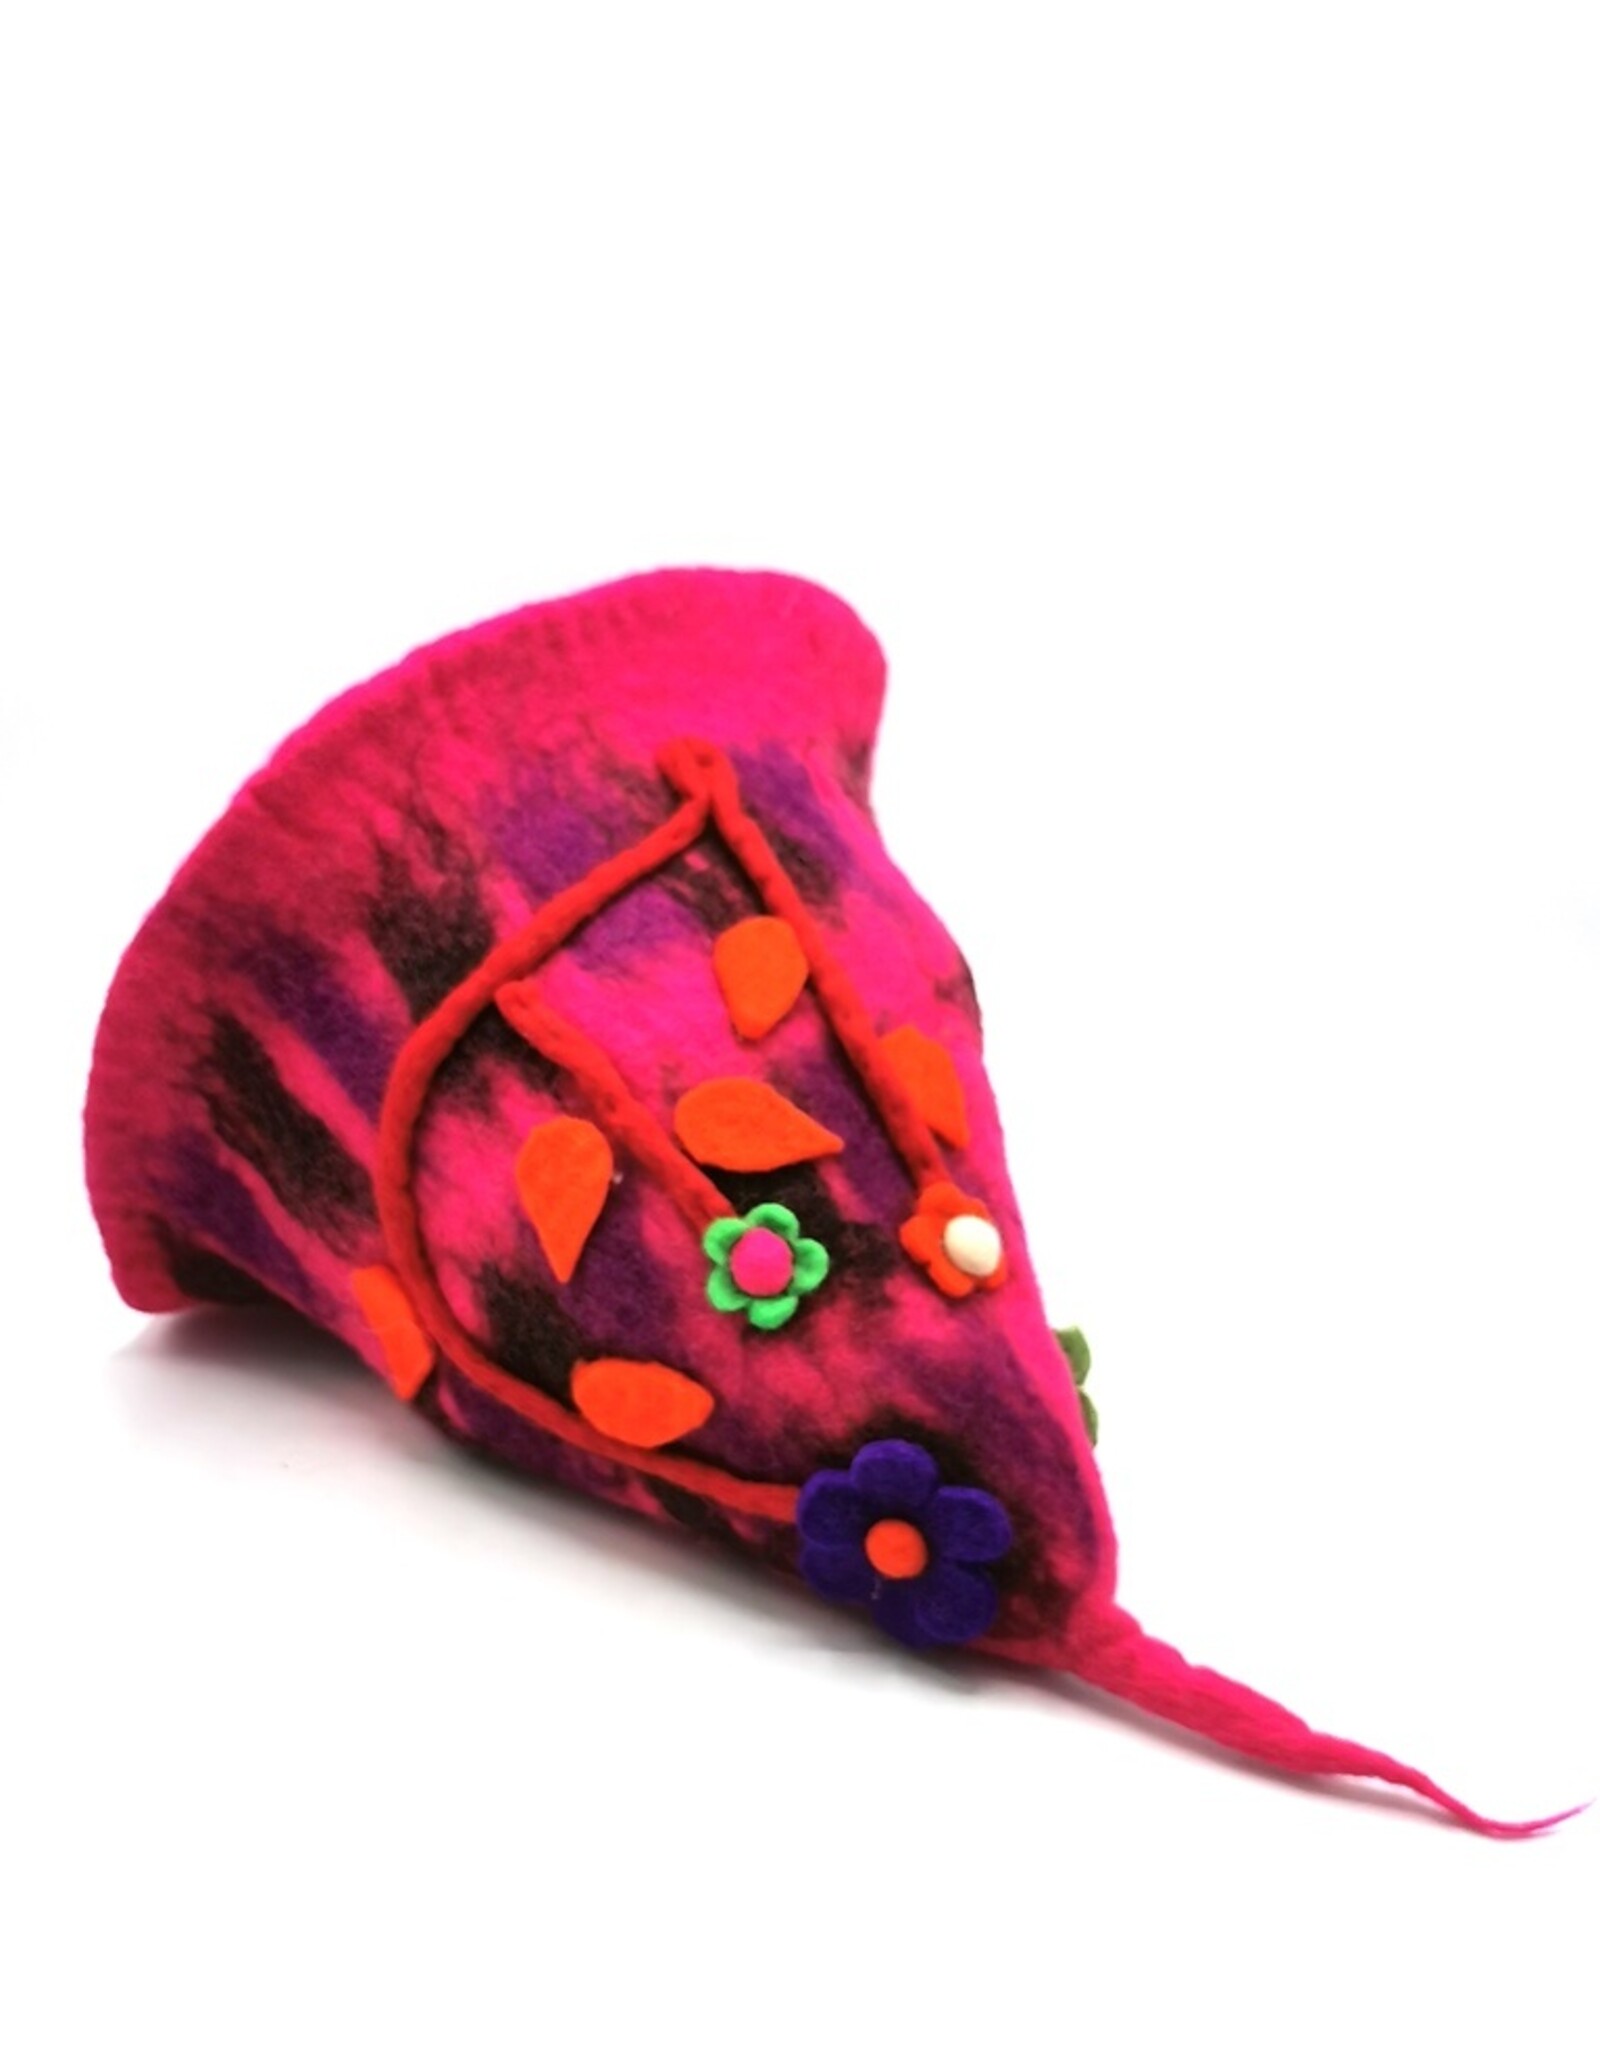 Trukado Miscellaneous - Felt pointed hat "Flowers Fantasy" Fuchsia-red